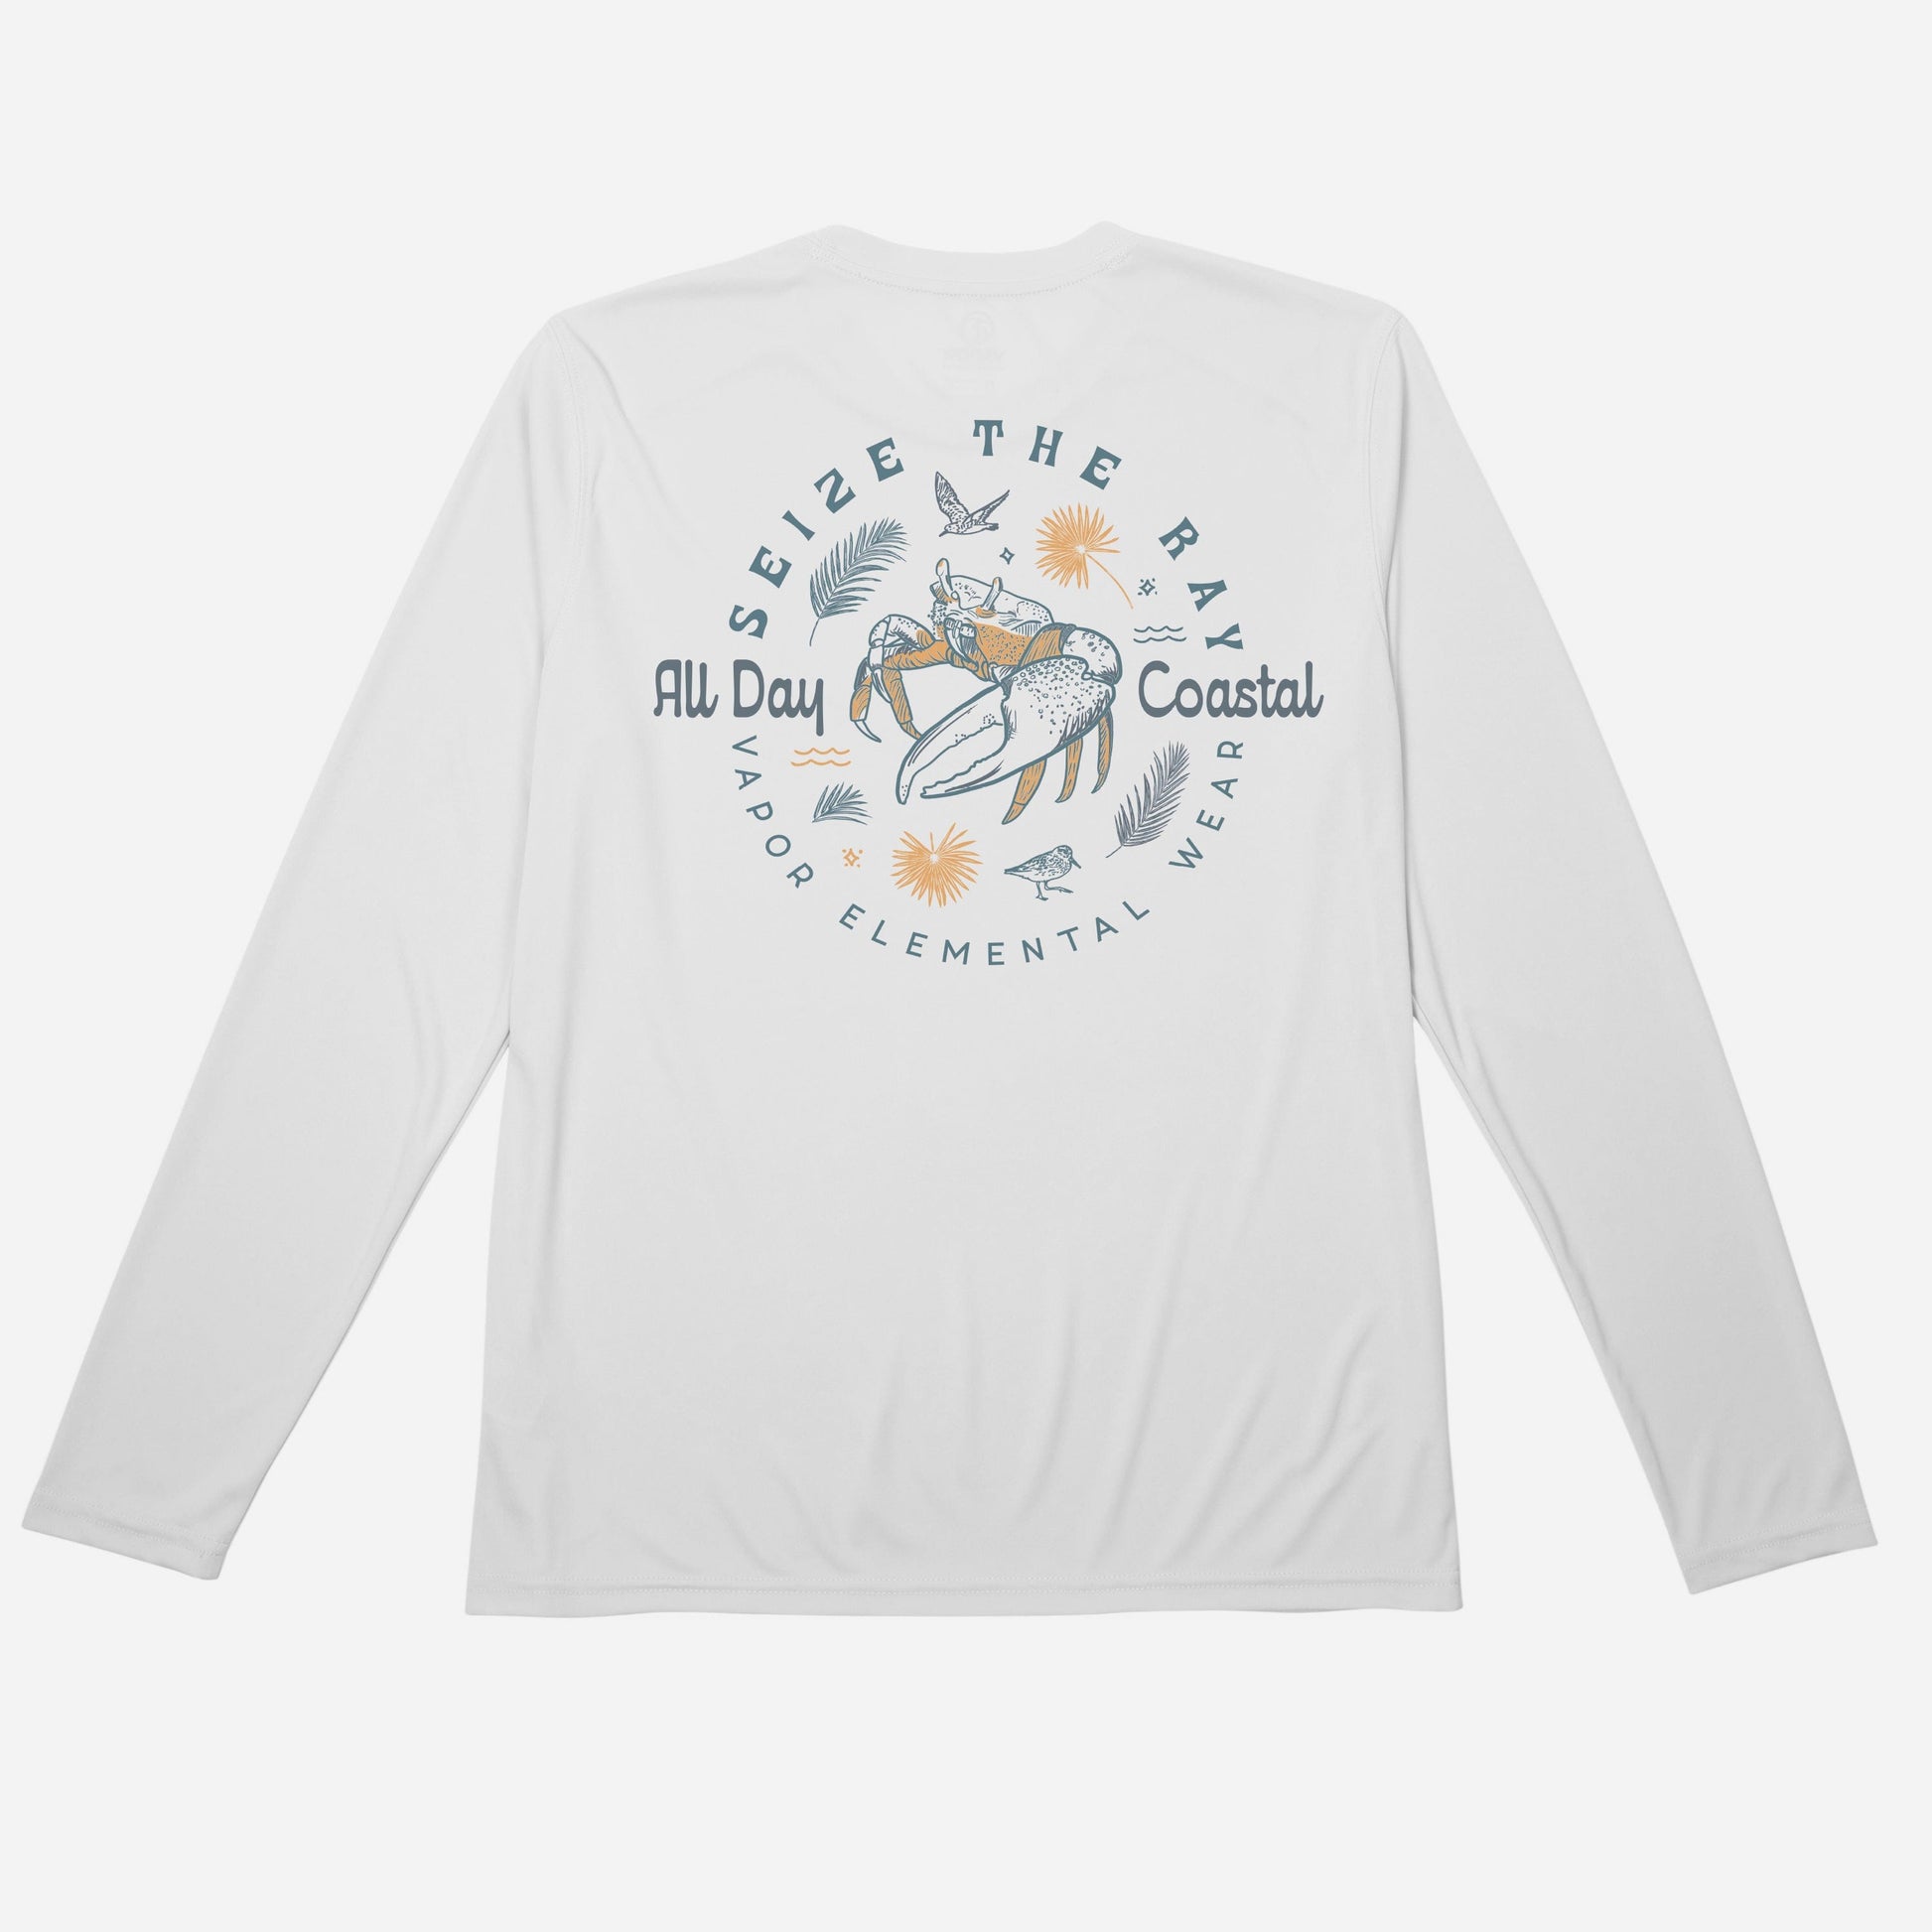 I Love Heart Pelicans Black Ladies T-Shirt (White Print)-US Size 4